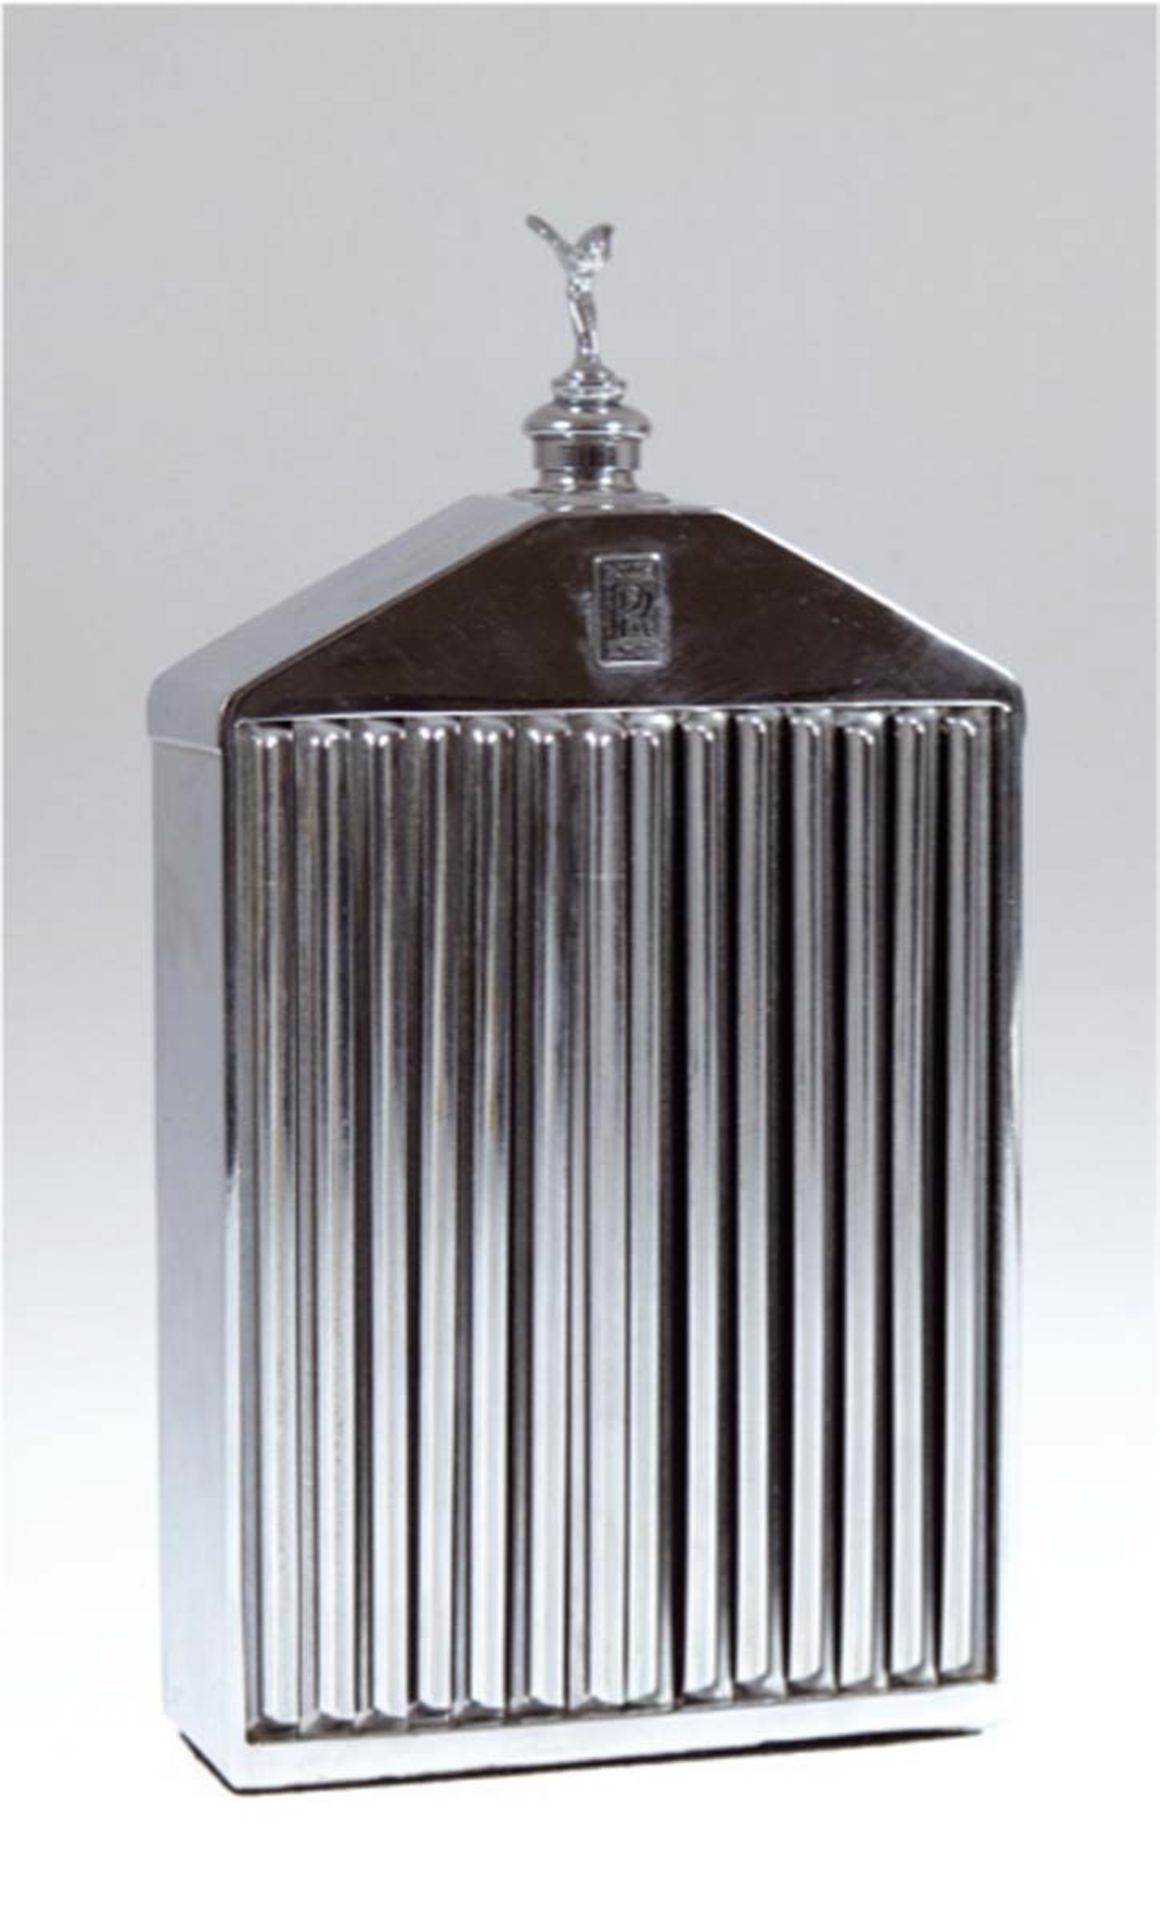 Schnapsflasche "Rolls Royce", um 1960, verchromtes Metallblech/Glas, bez. "Ruddspeed ltd,England,